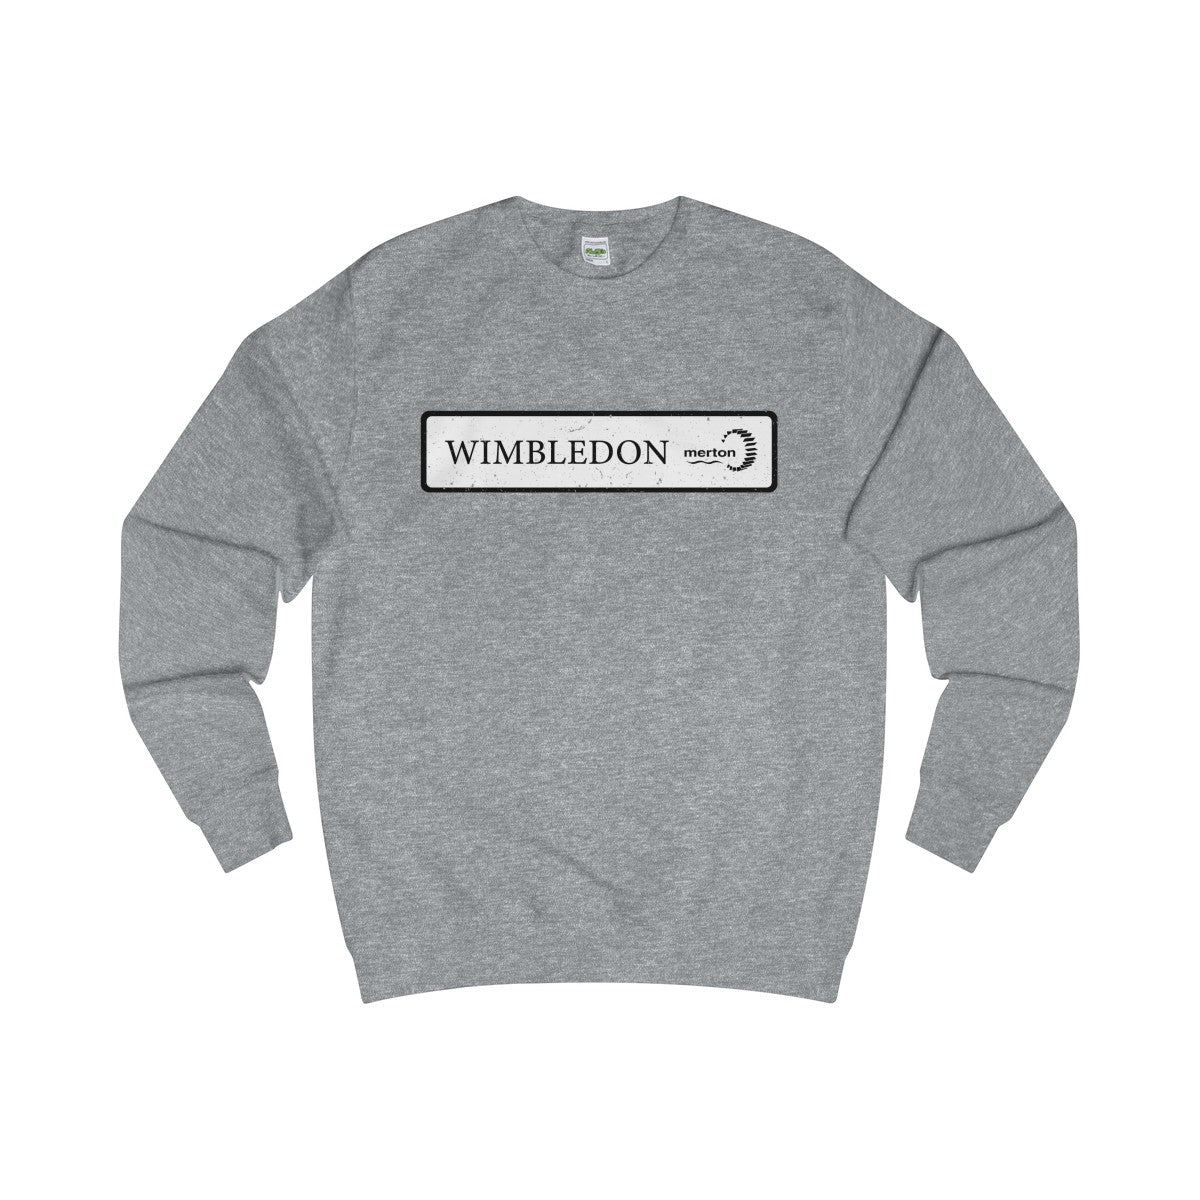 Wimbledon Road Sign Sweater